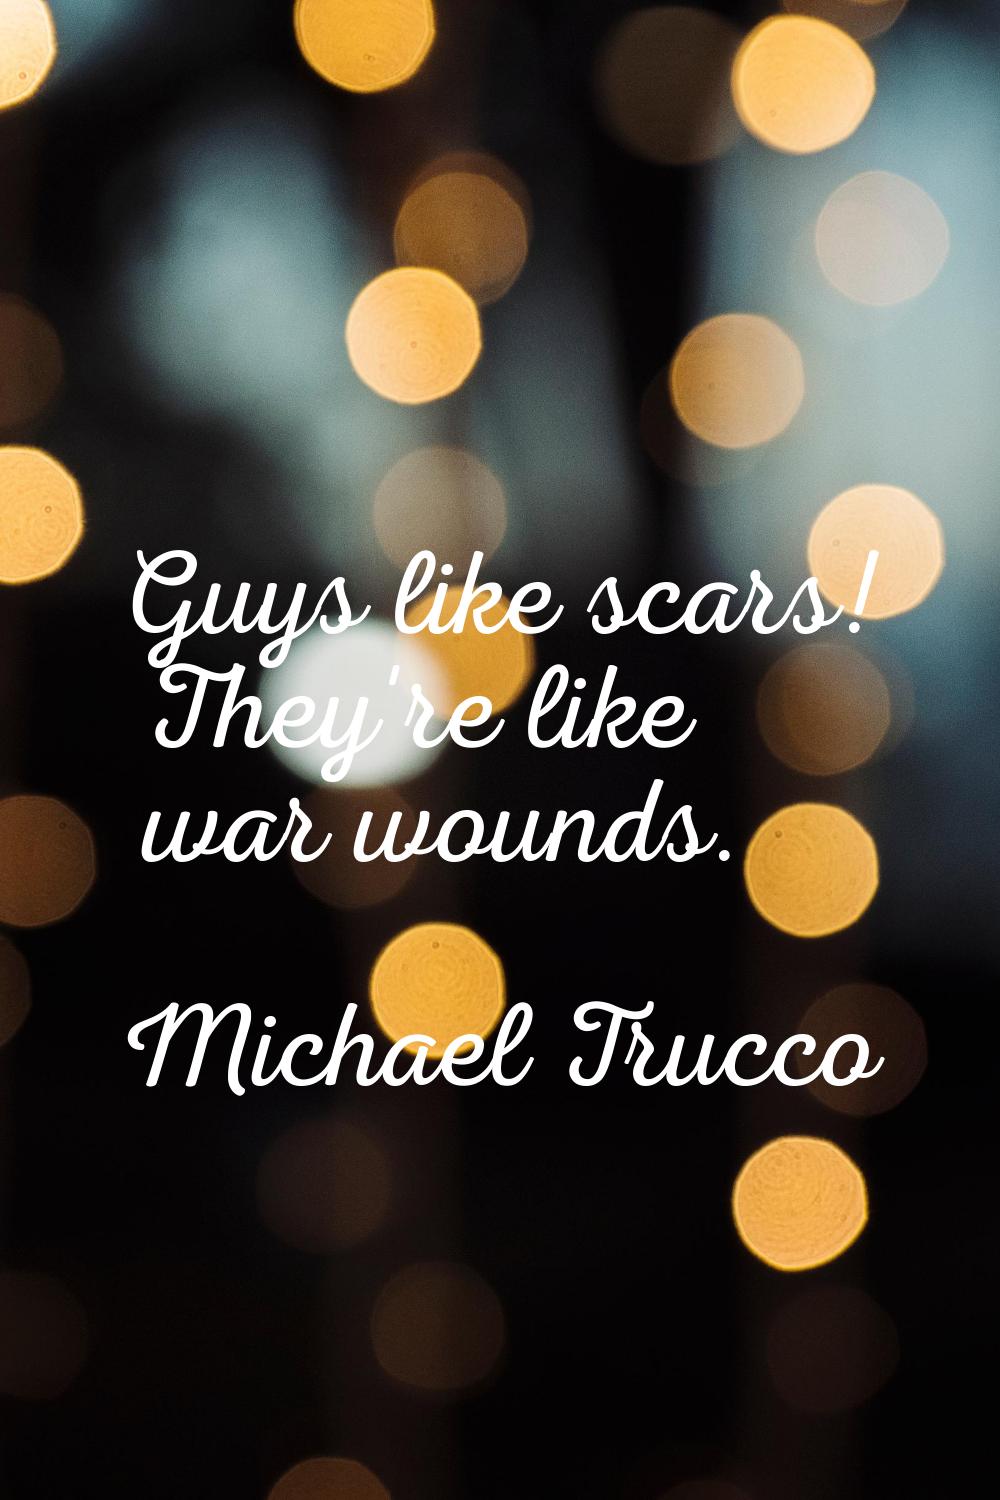 Guys like scars! They're like war wounds.